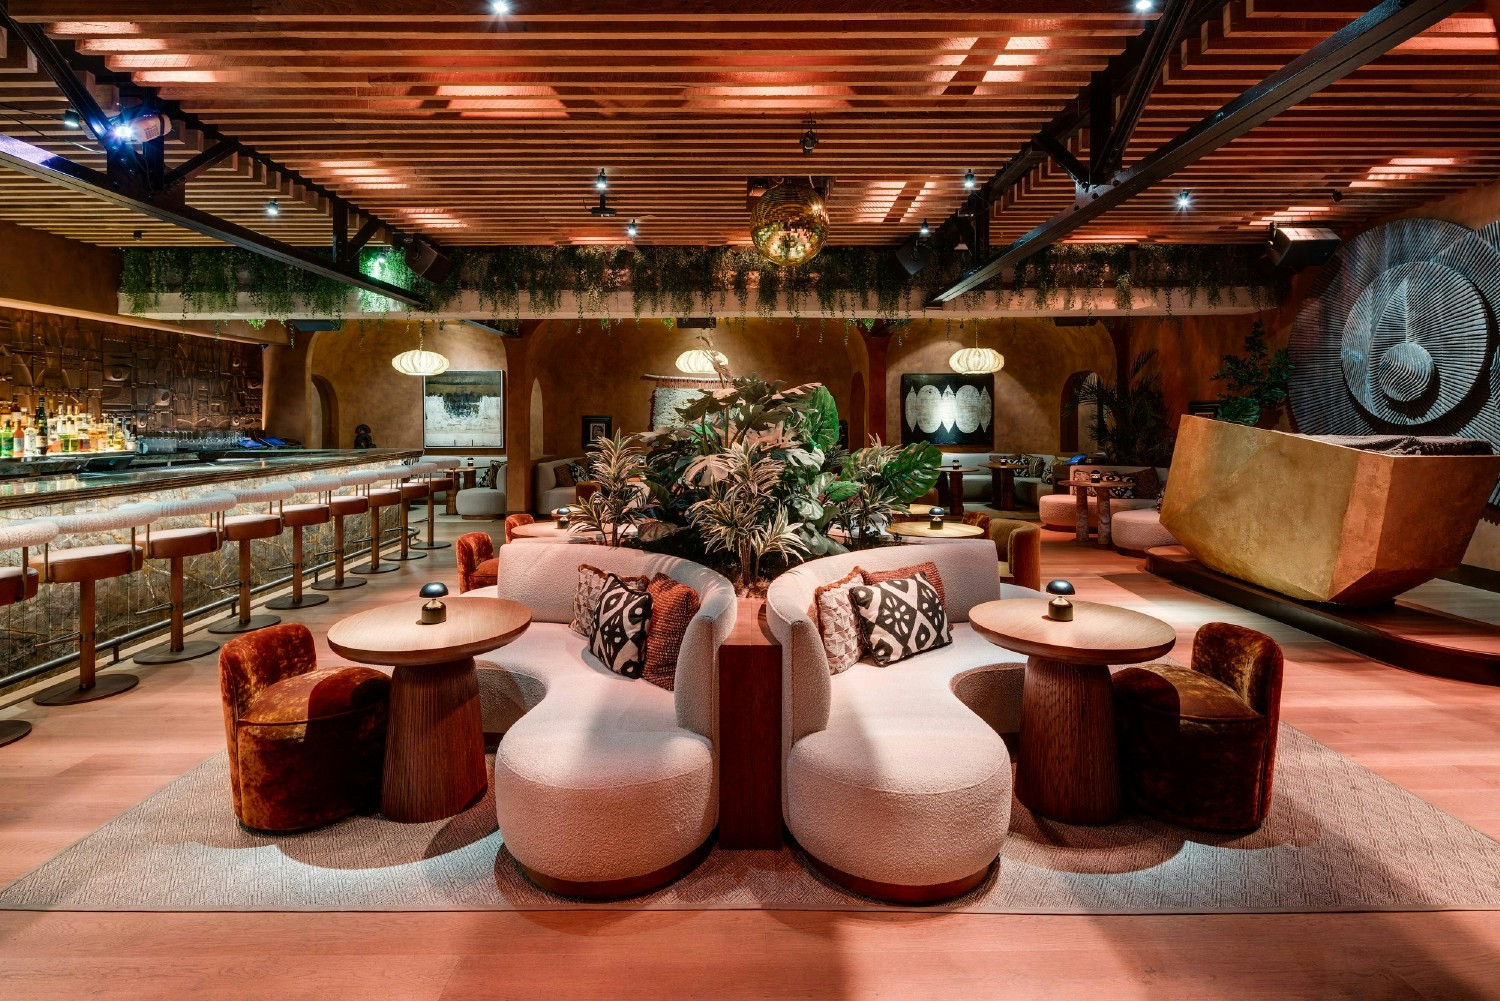 MILA Lounge on Lincoln Road in Miami, FL. 